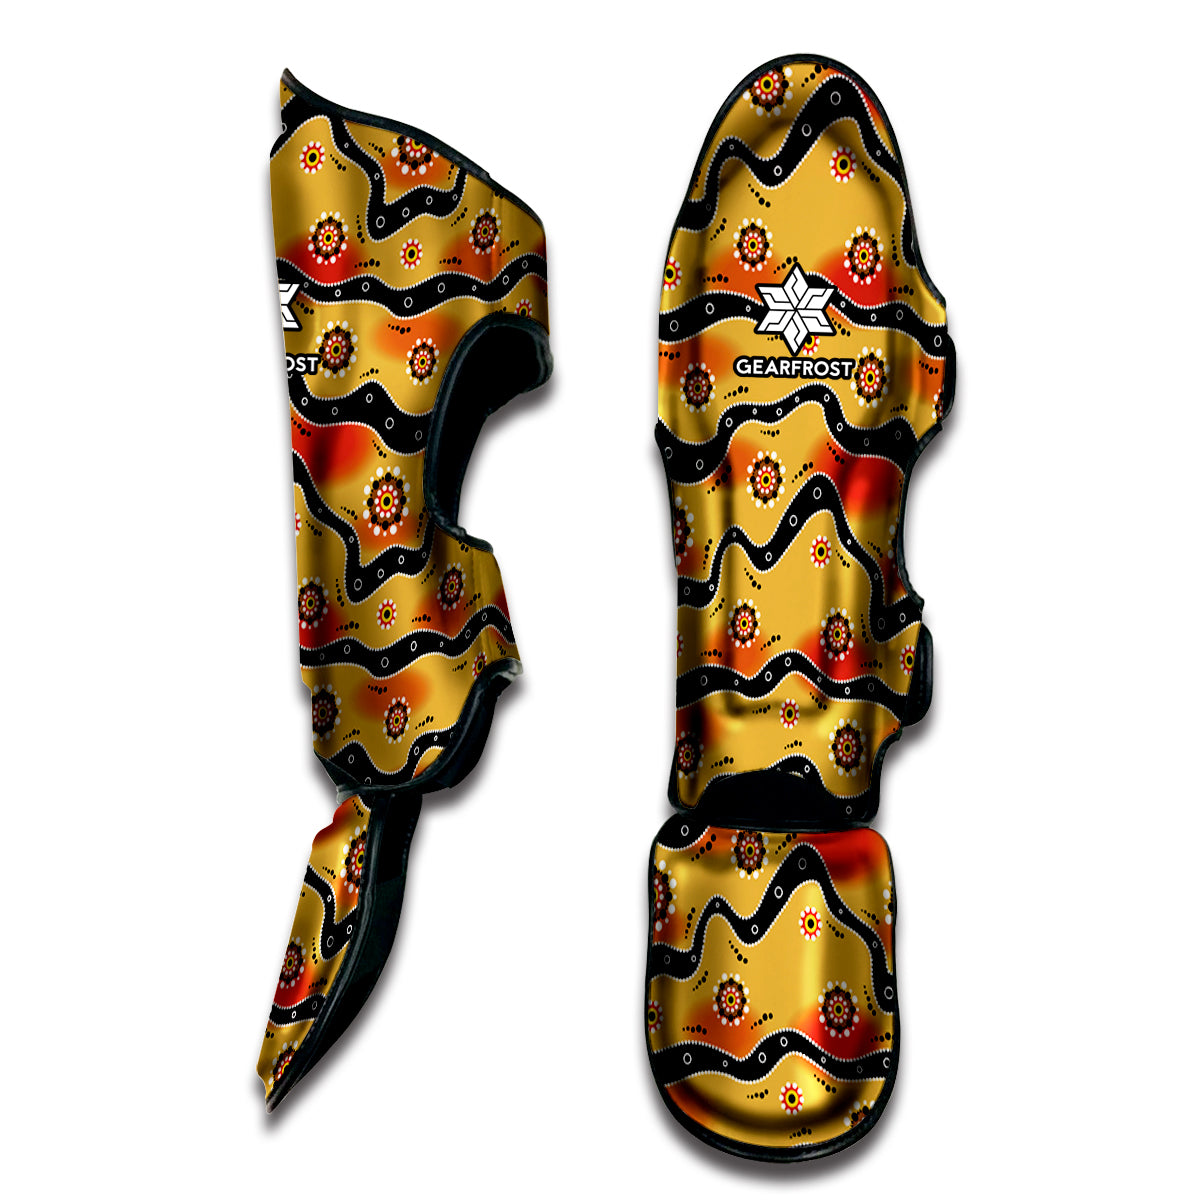 Australian Aboriginal Pattern Print Muay Thai Shin Guard